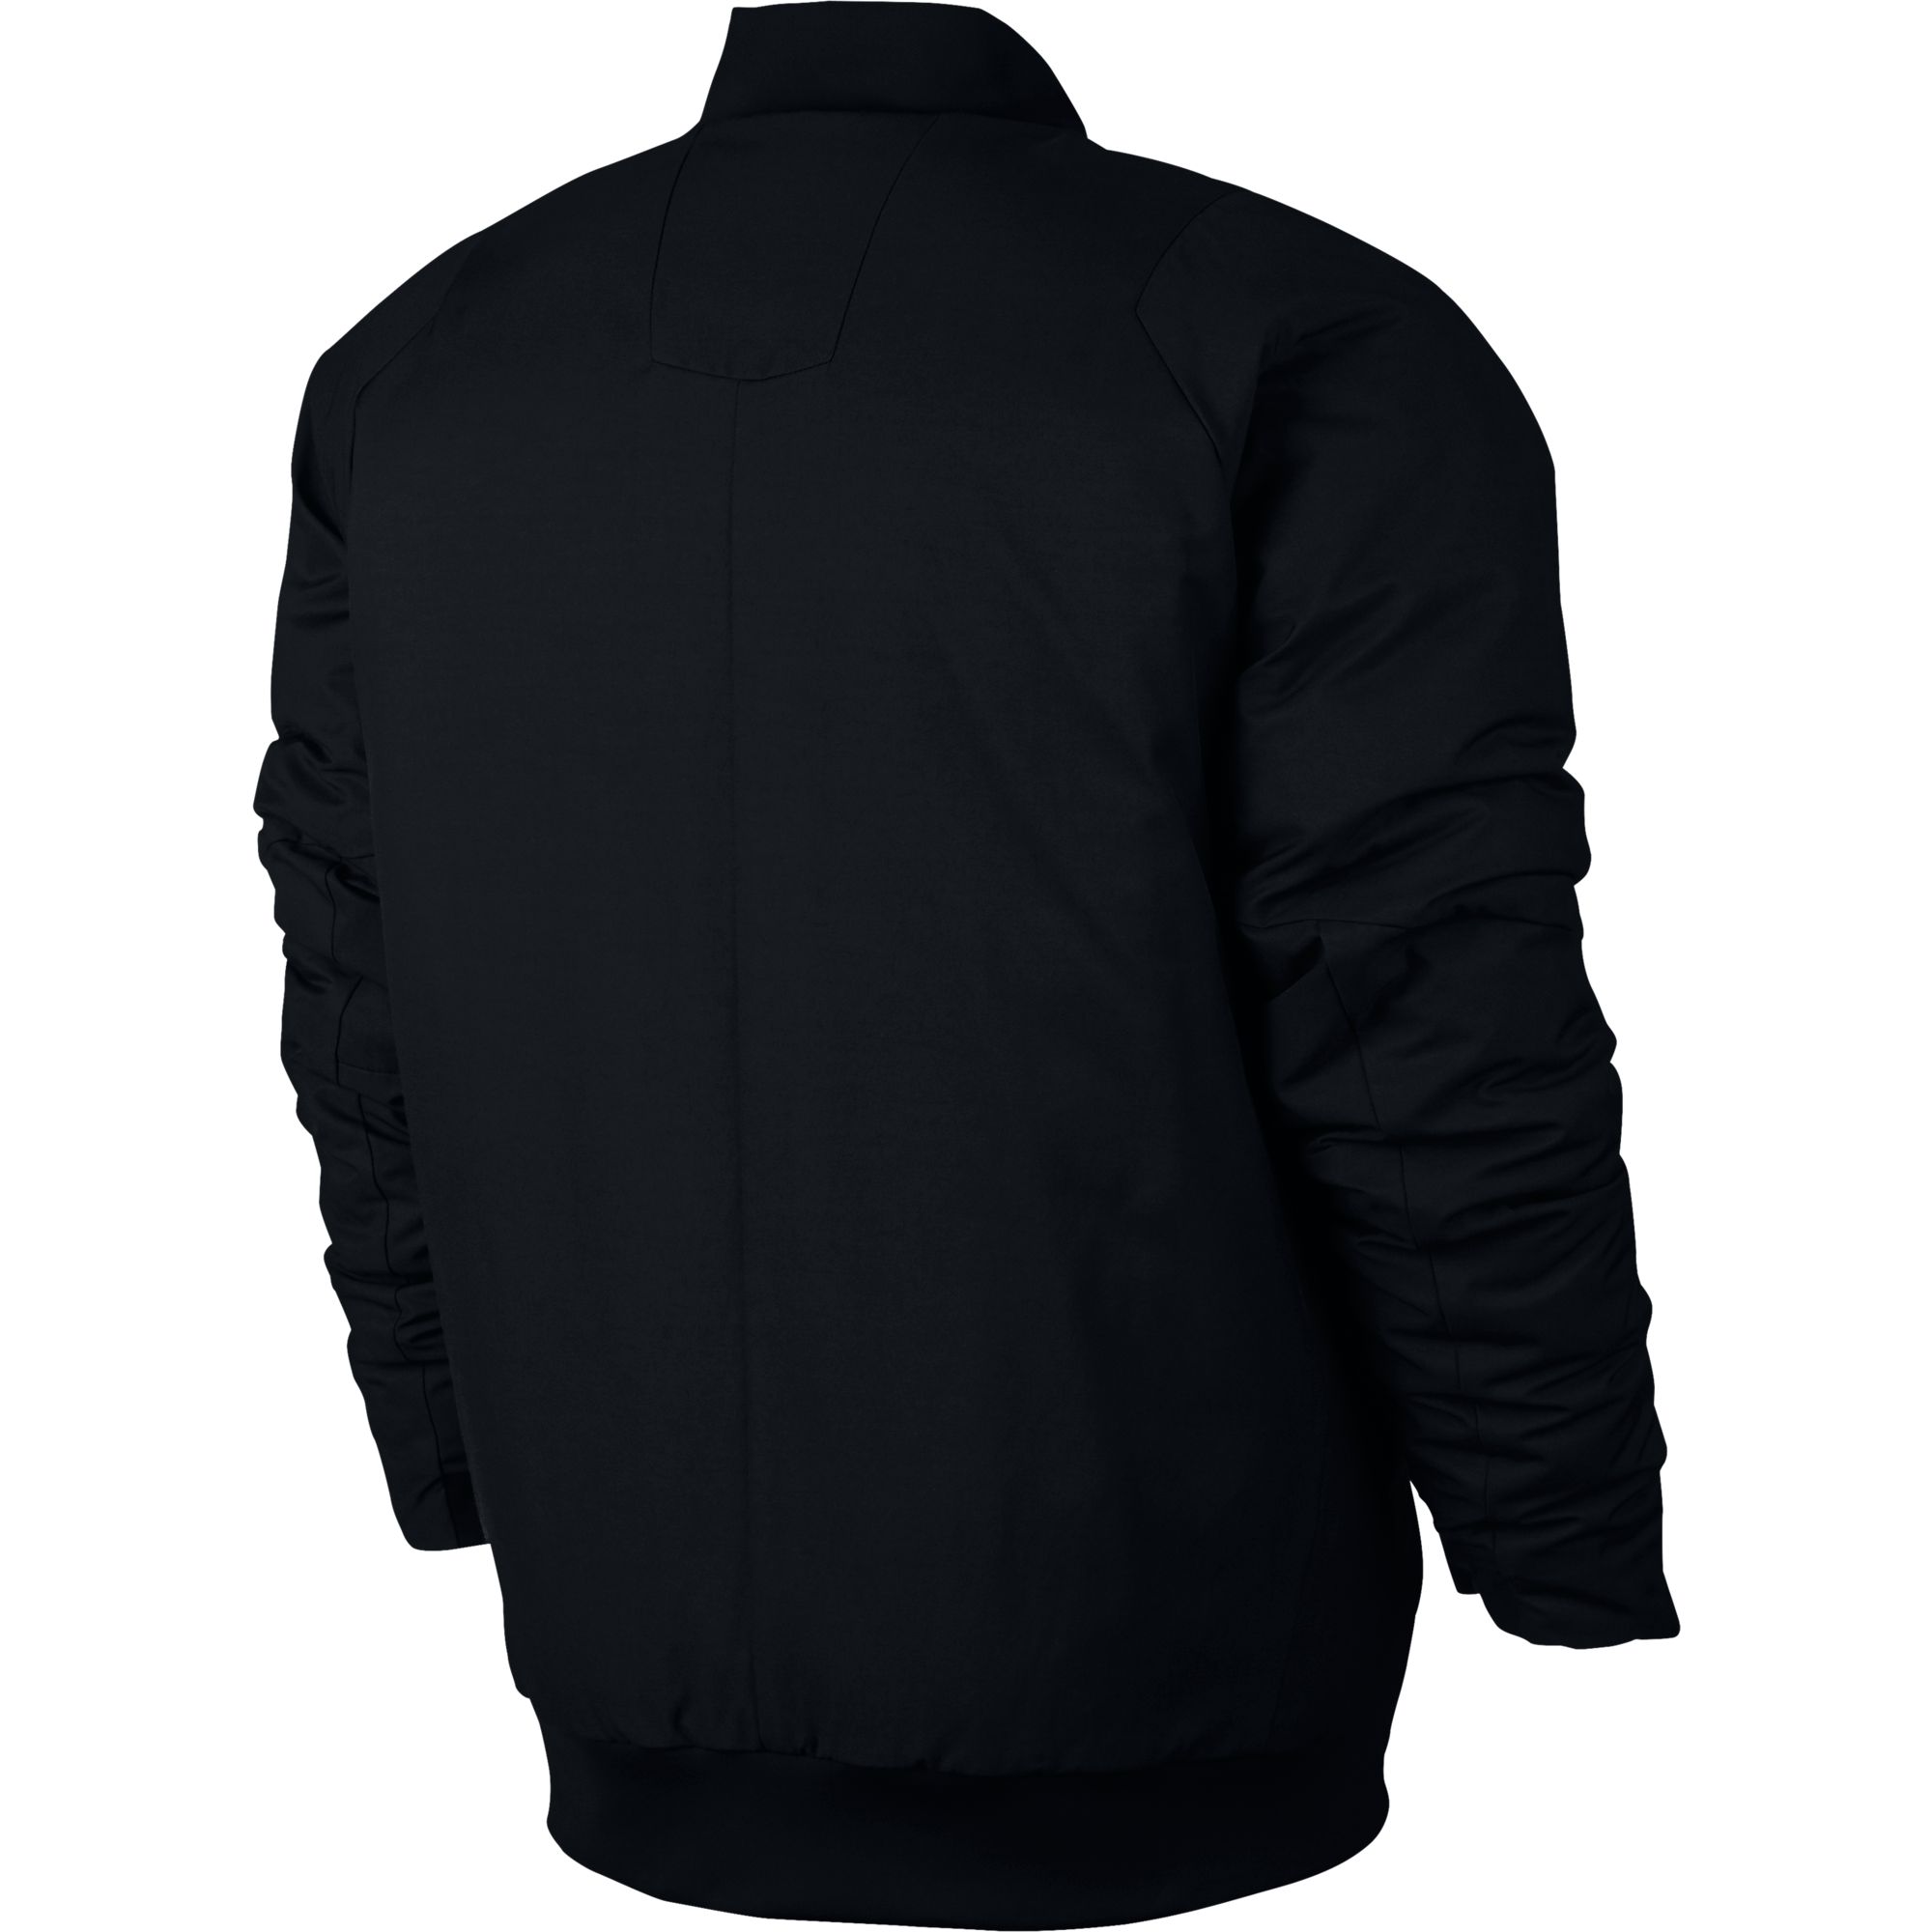 Nike Tech Fleece Aeroloft Bomber Men's Jackets Black 863726-010 | eBay